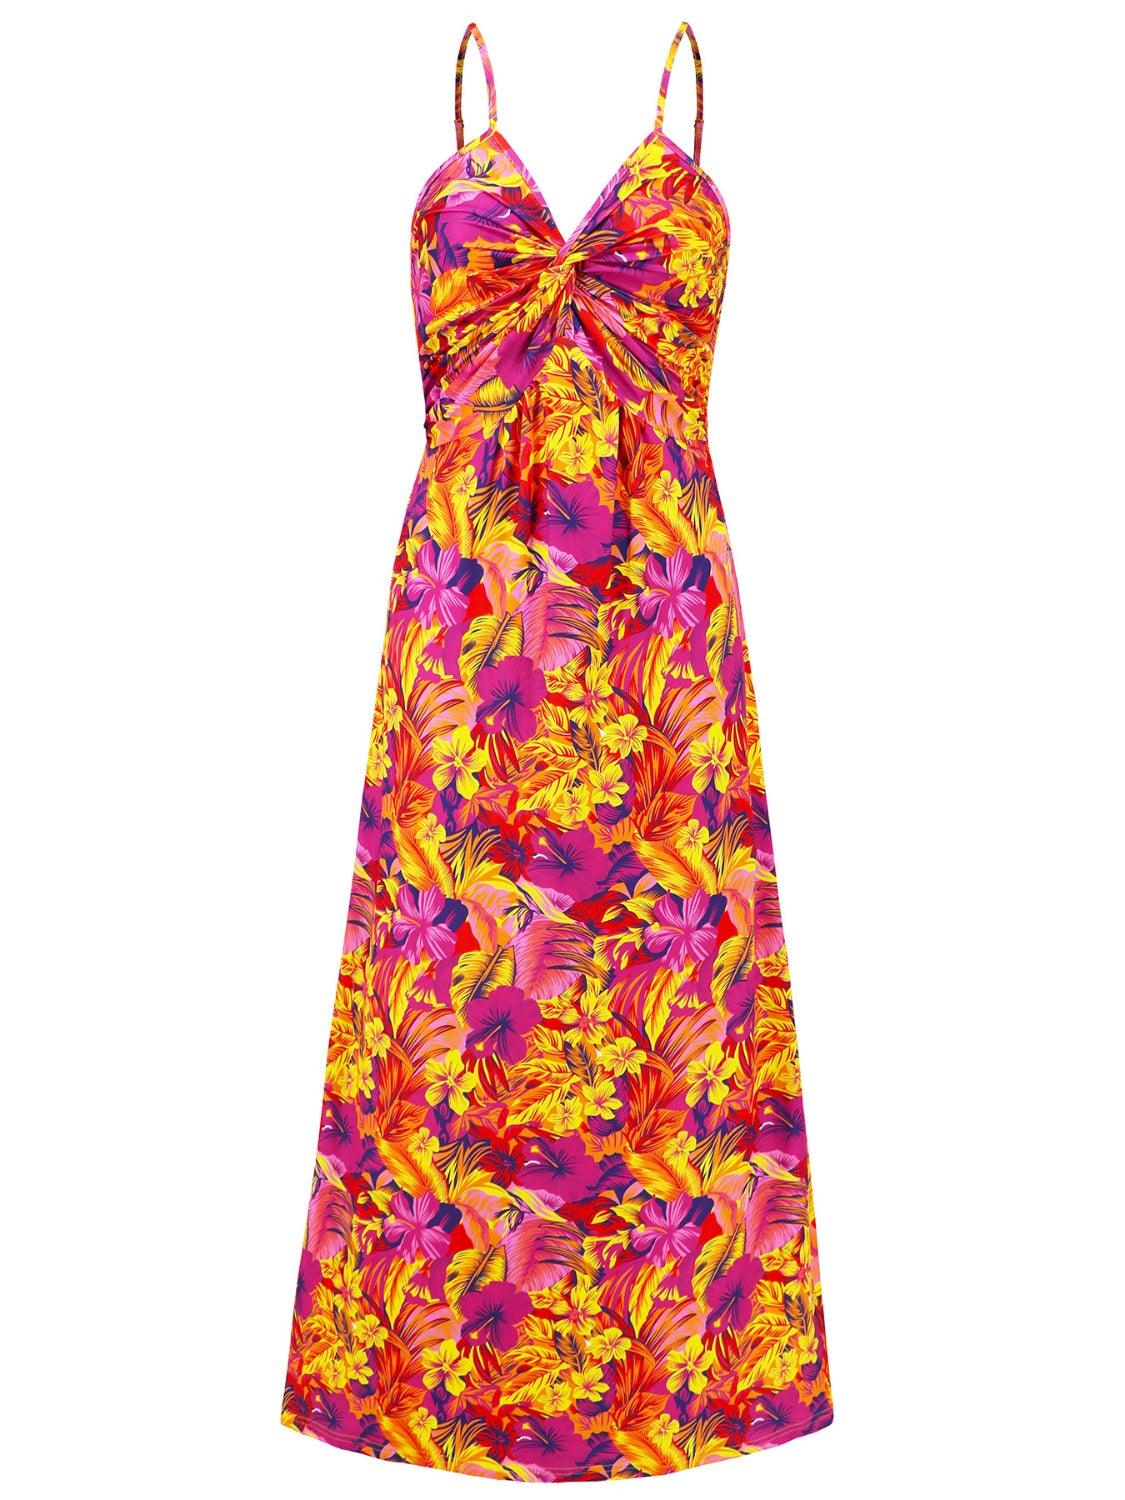 Bona Fide Fashion - Twisted Printed V-Neck Cami Dress - Women Fashion - Bona Fide Fashion